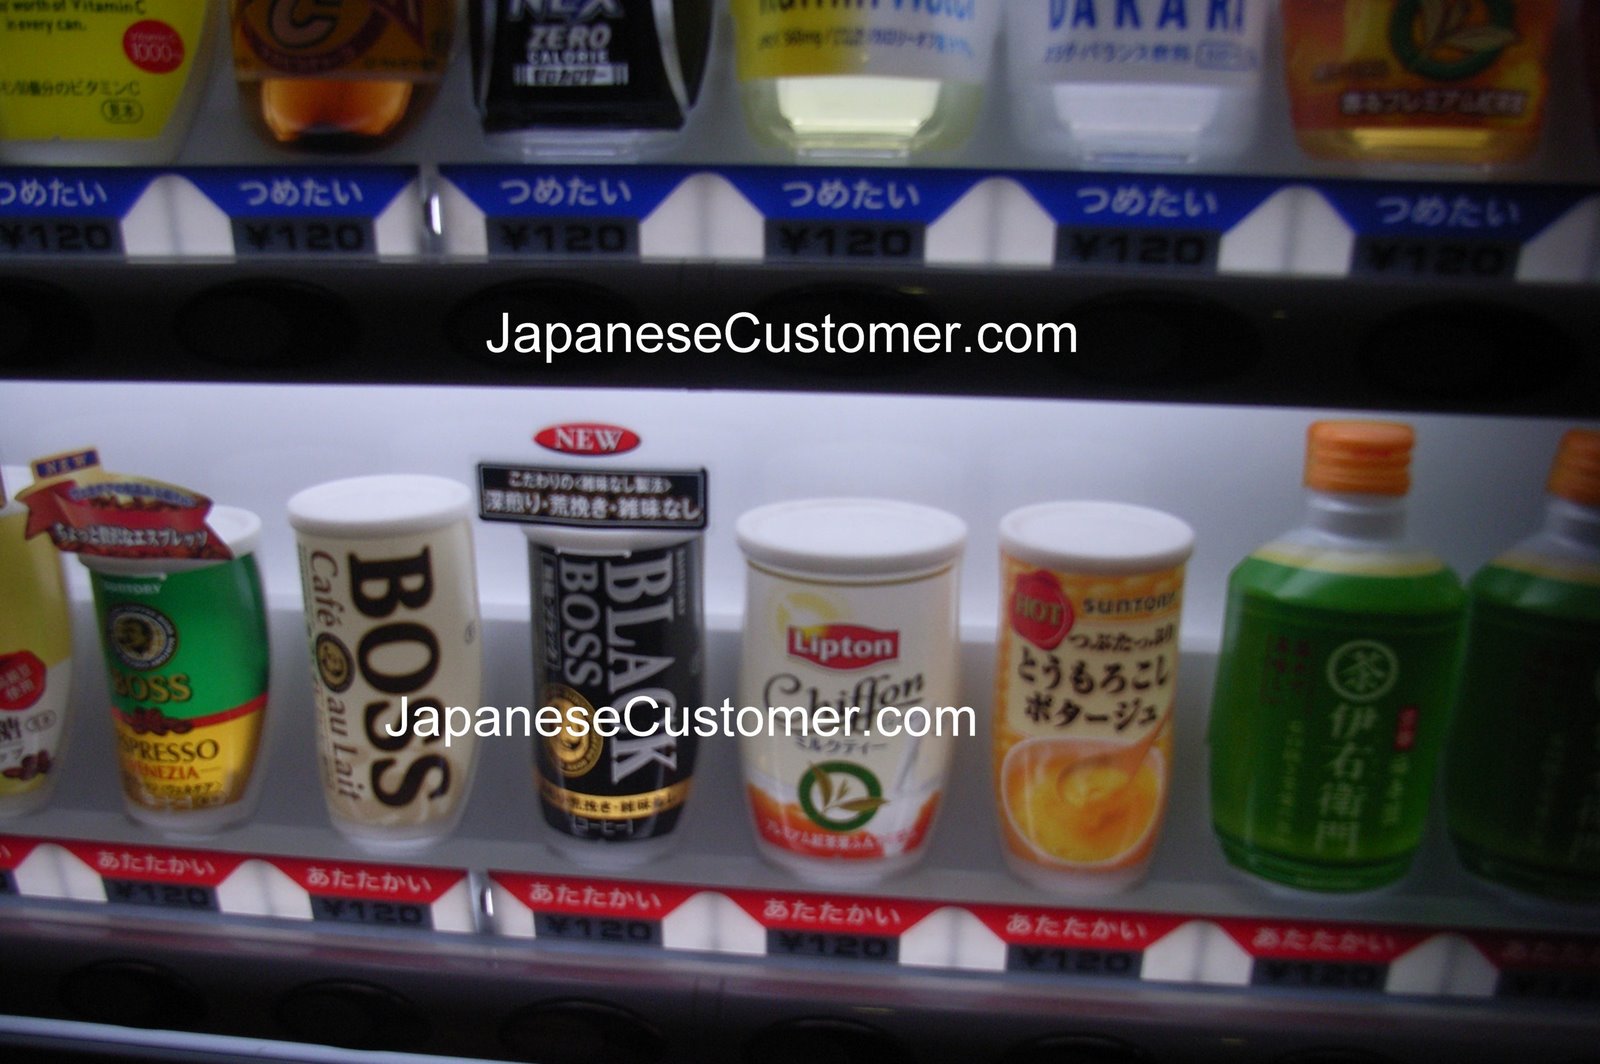 Japanese vending machine drink brands copyright  2010